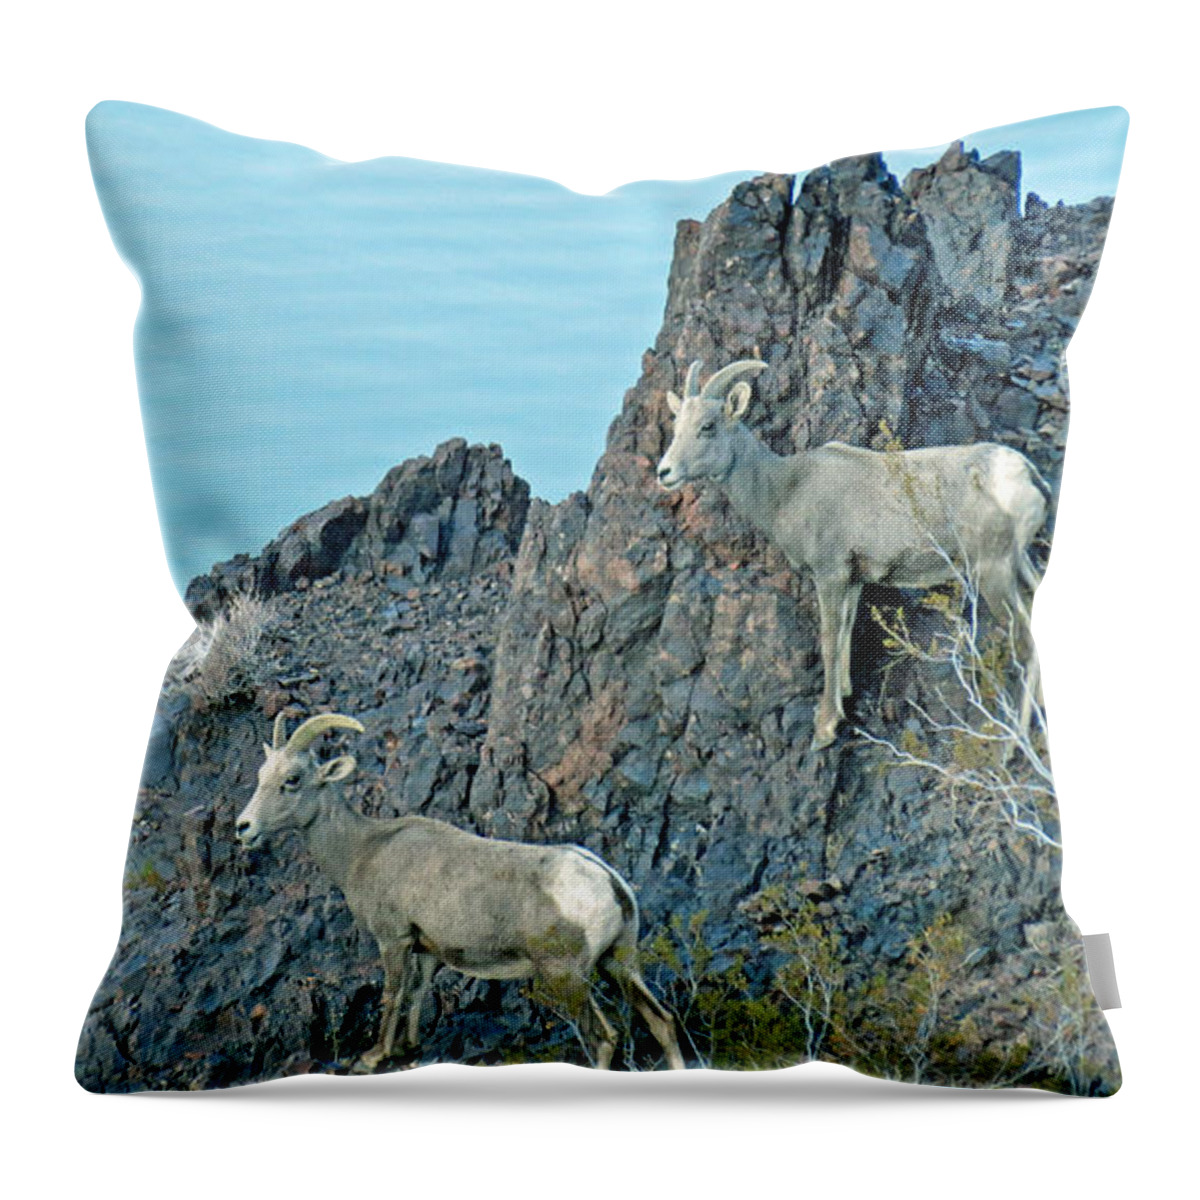 Sheep Throw Pillow featuring the photograph A Group Of Desert Bighorn Sheep by Kay Novy